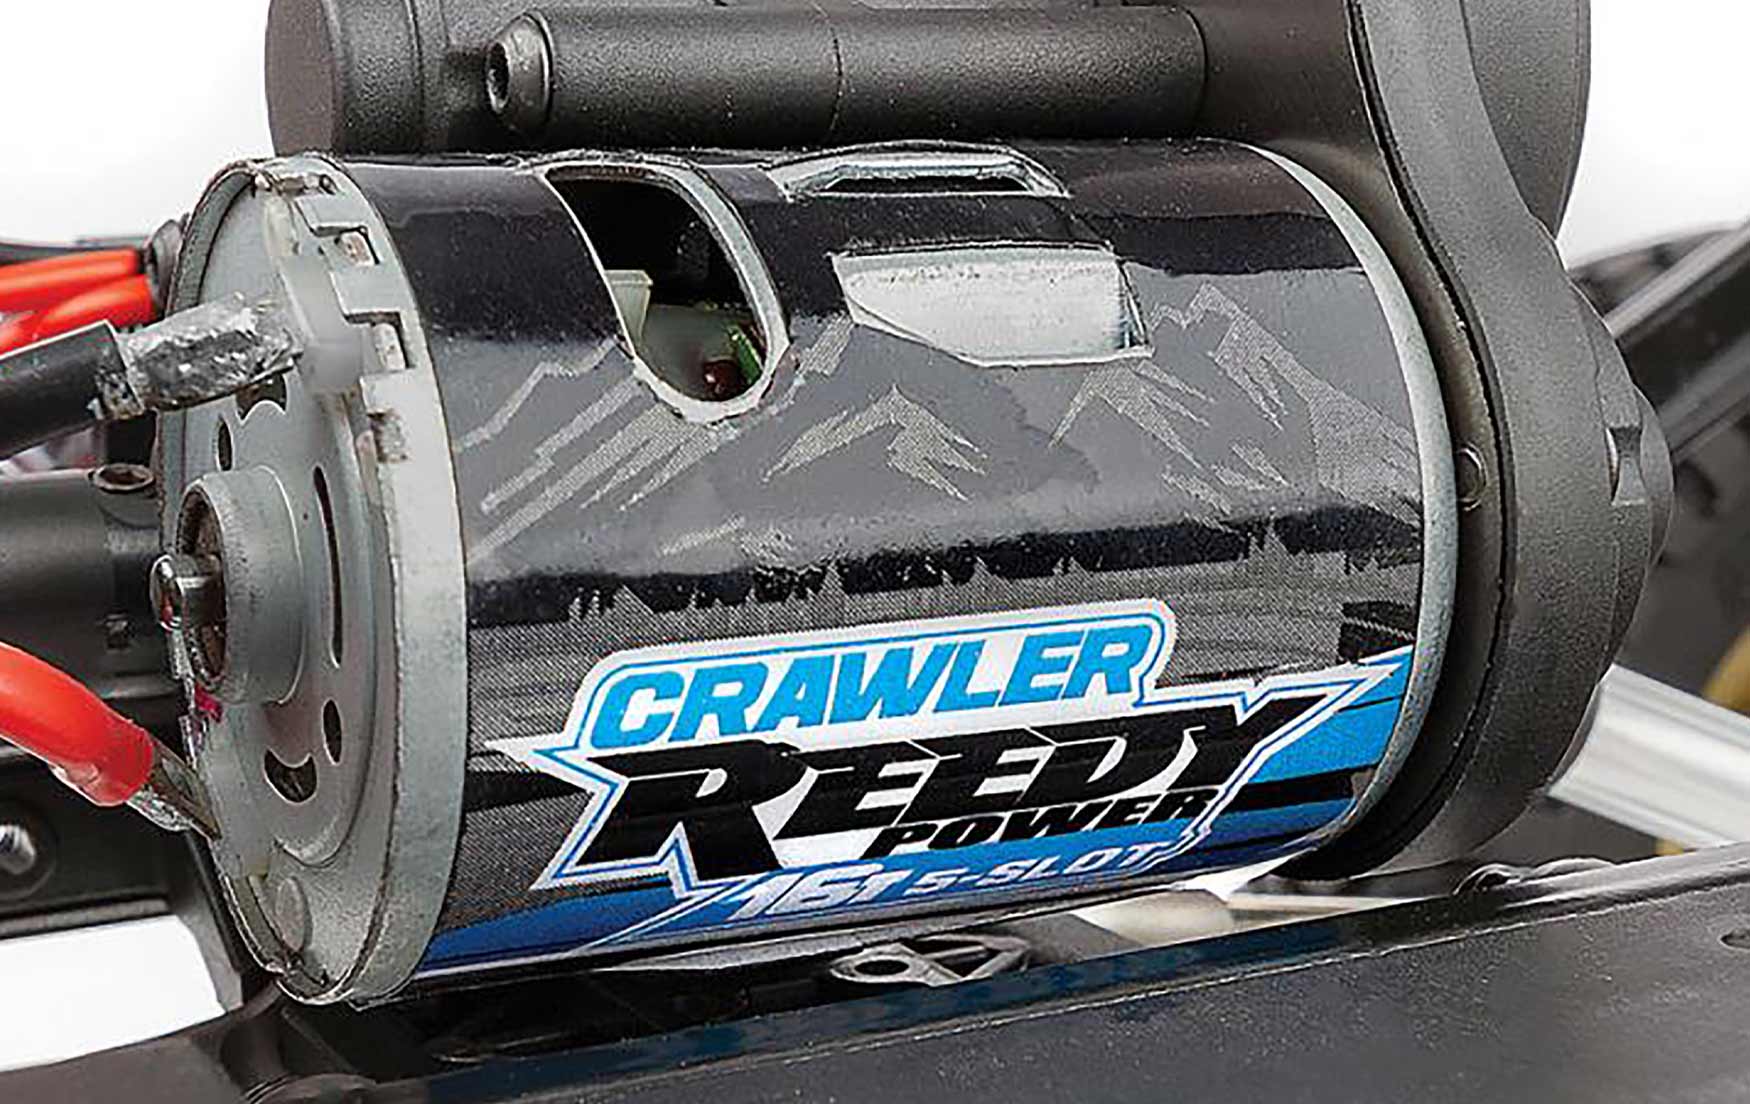 Reedy Power Crawler Motor